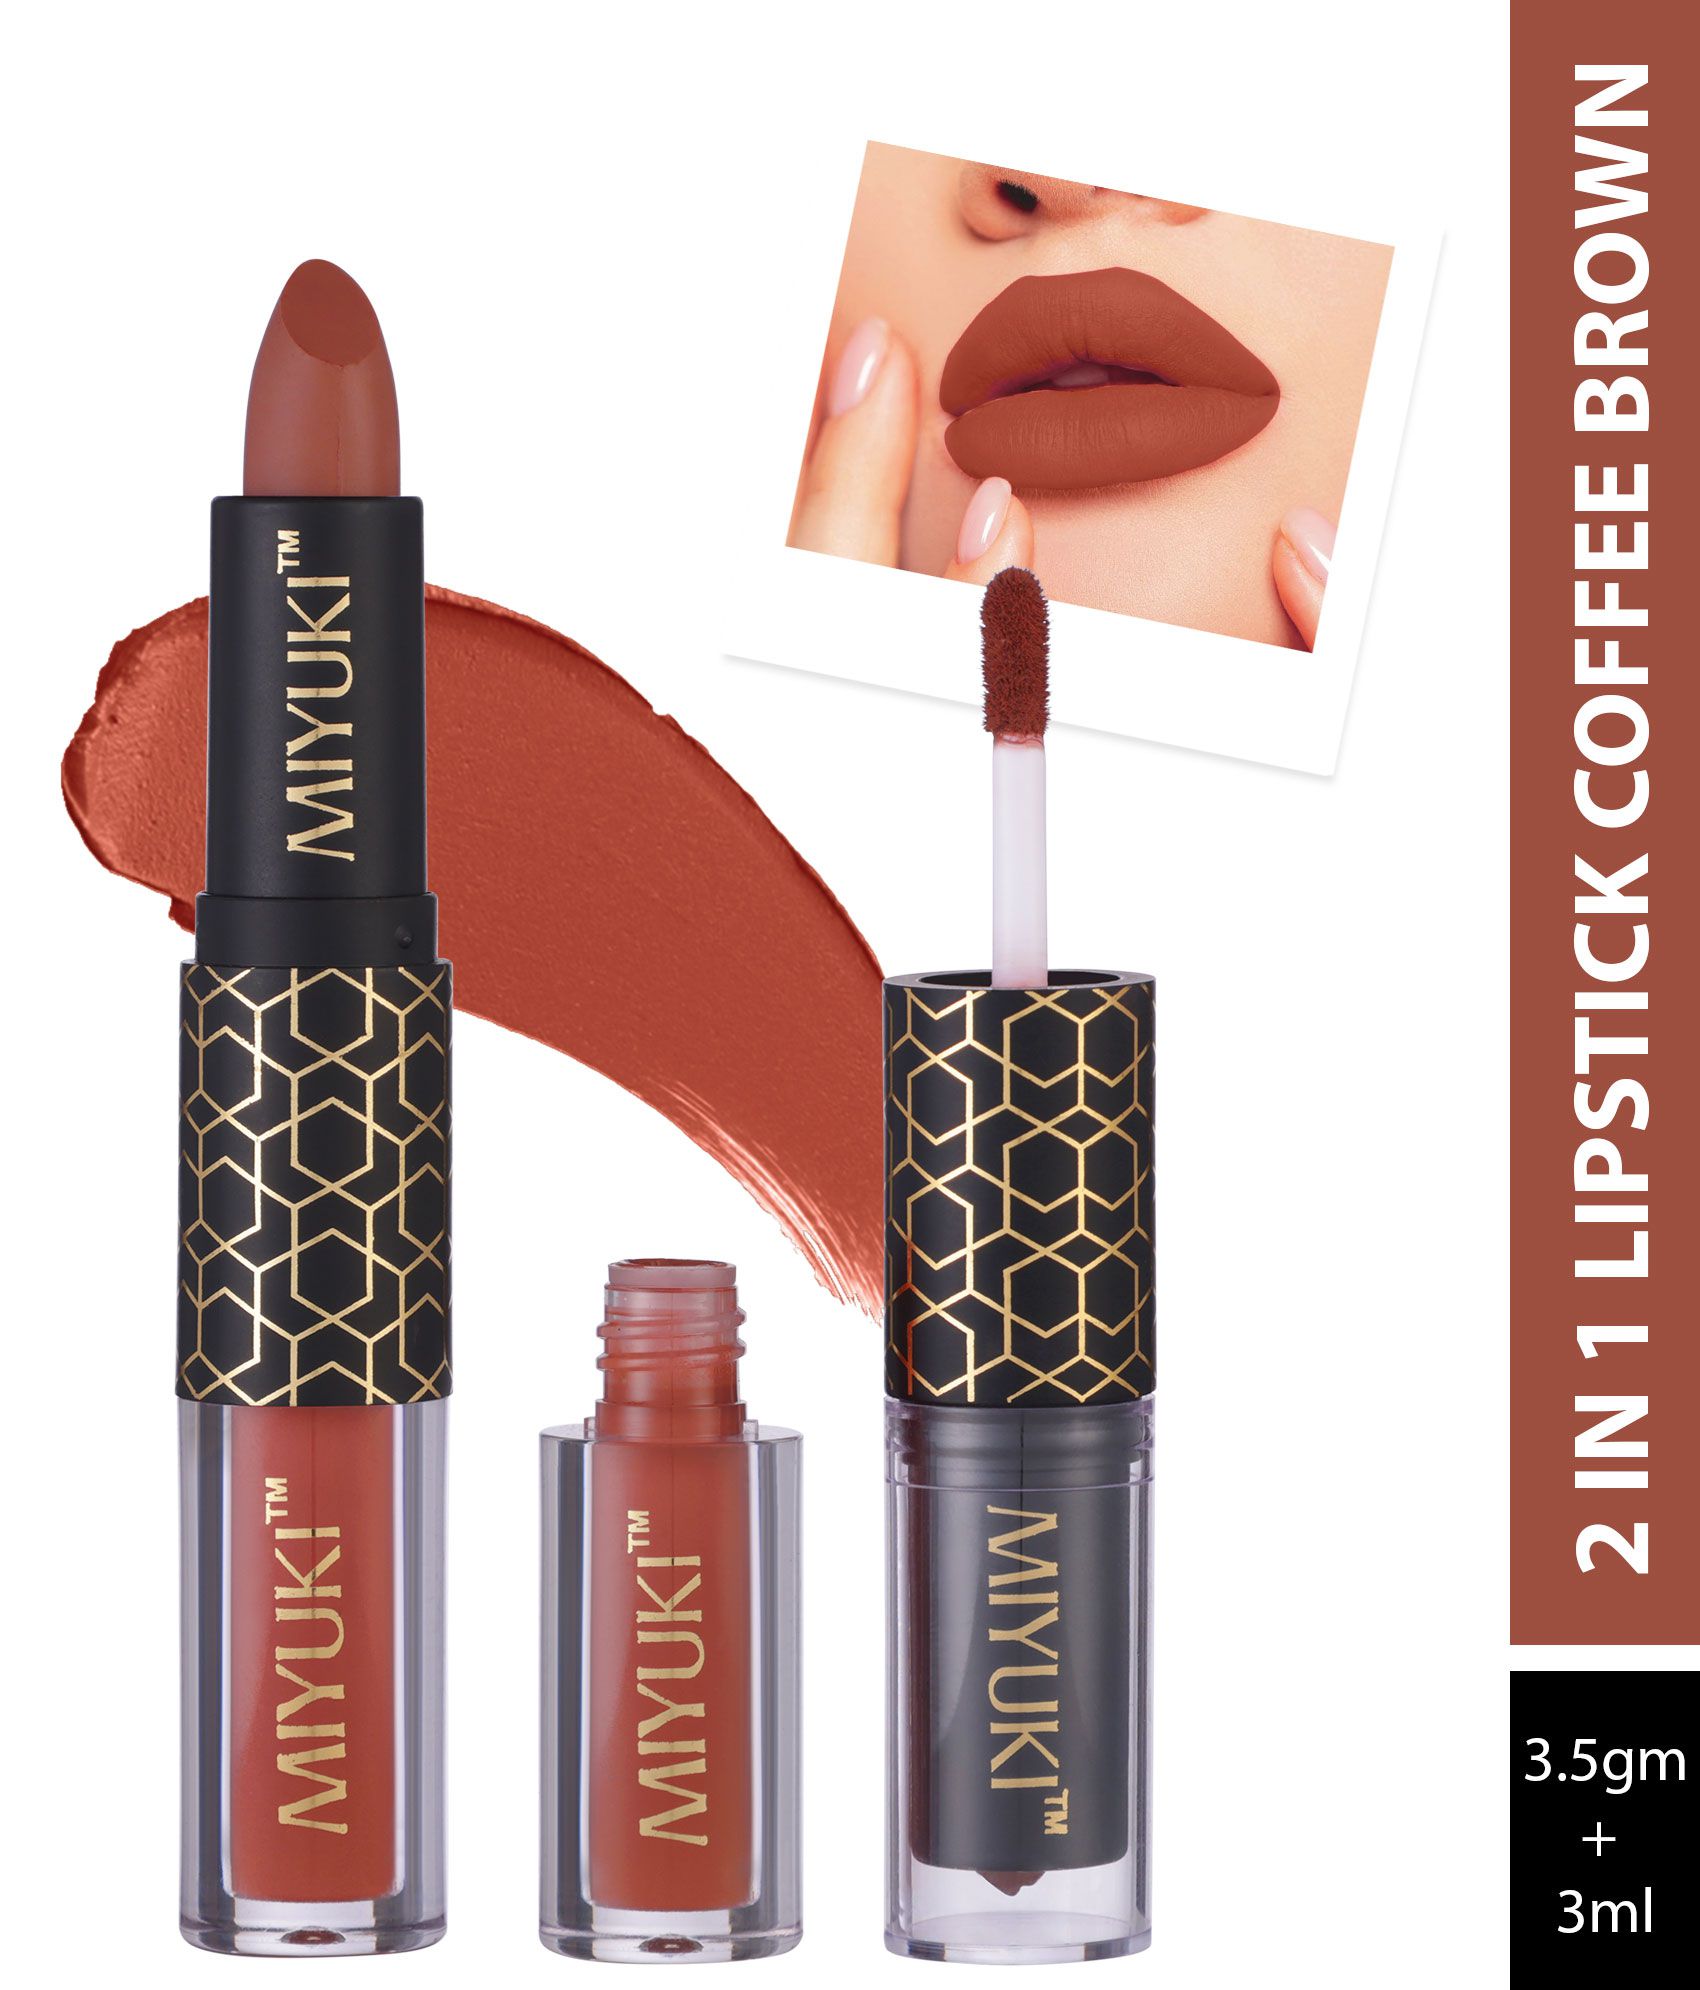     			Miyuki 2in1 Long Lasting Transfer Proof Matte Gloss Liquid and Lipstick - Coffee Brown